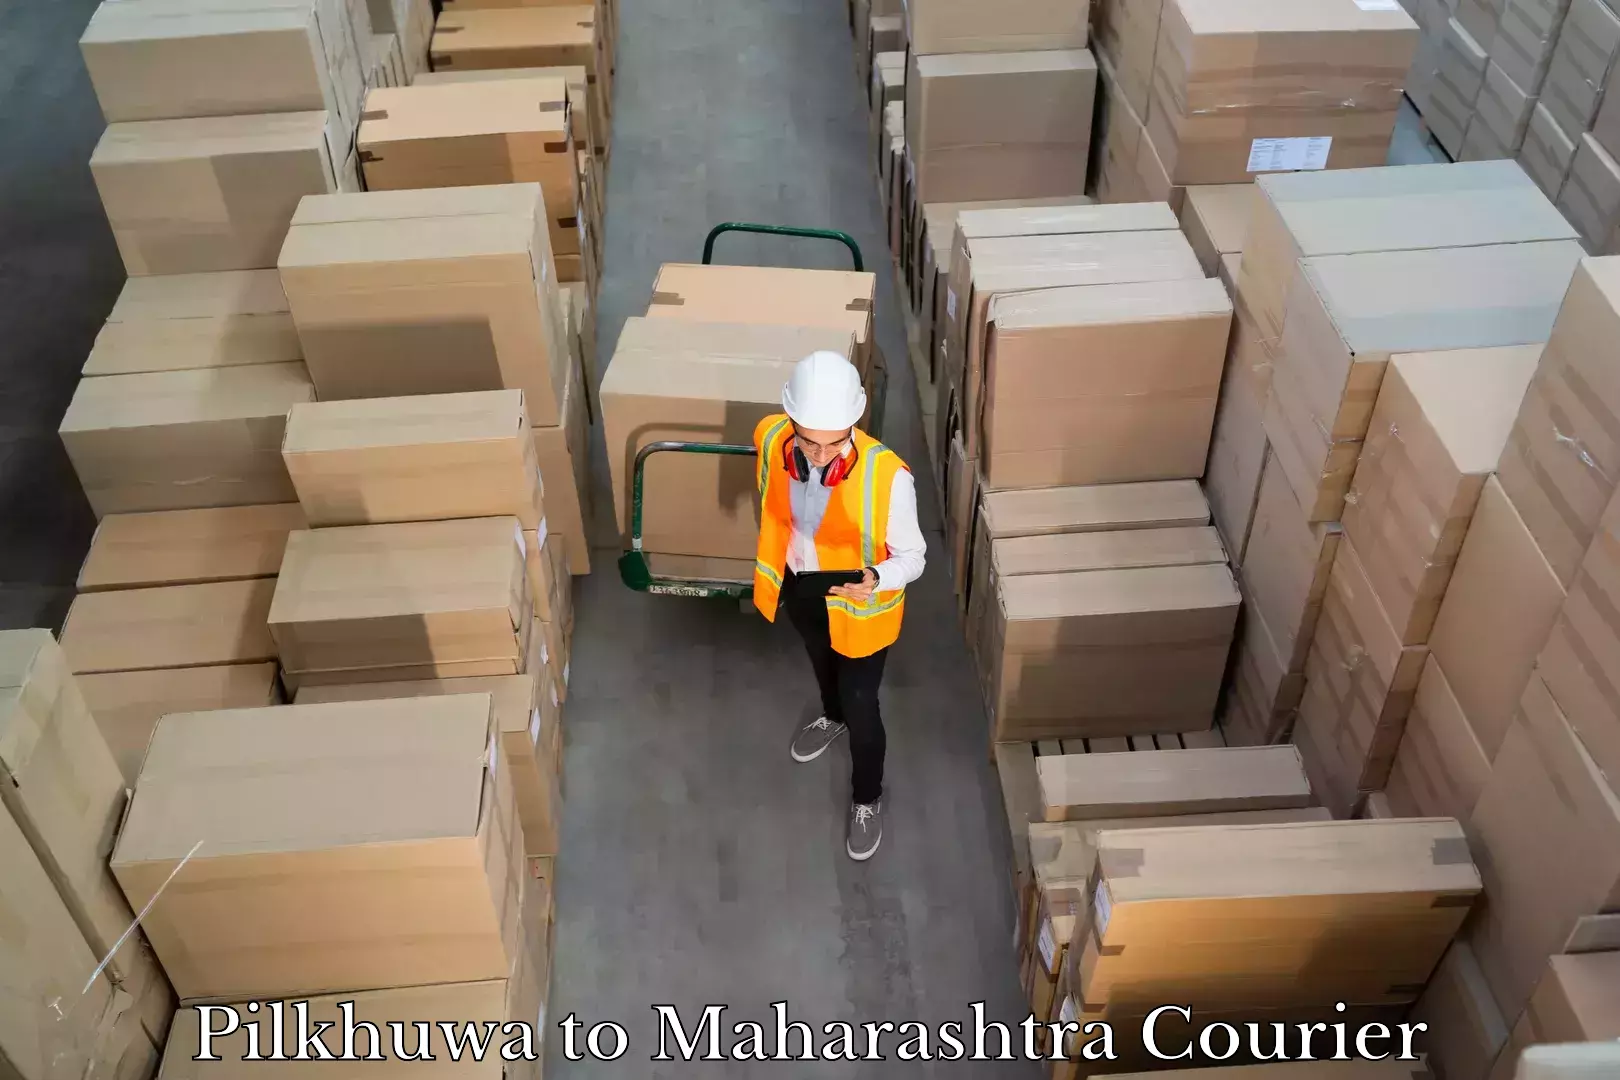 Luggage delivery network Pilkhuwa to Maharashtra